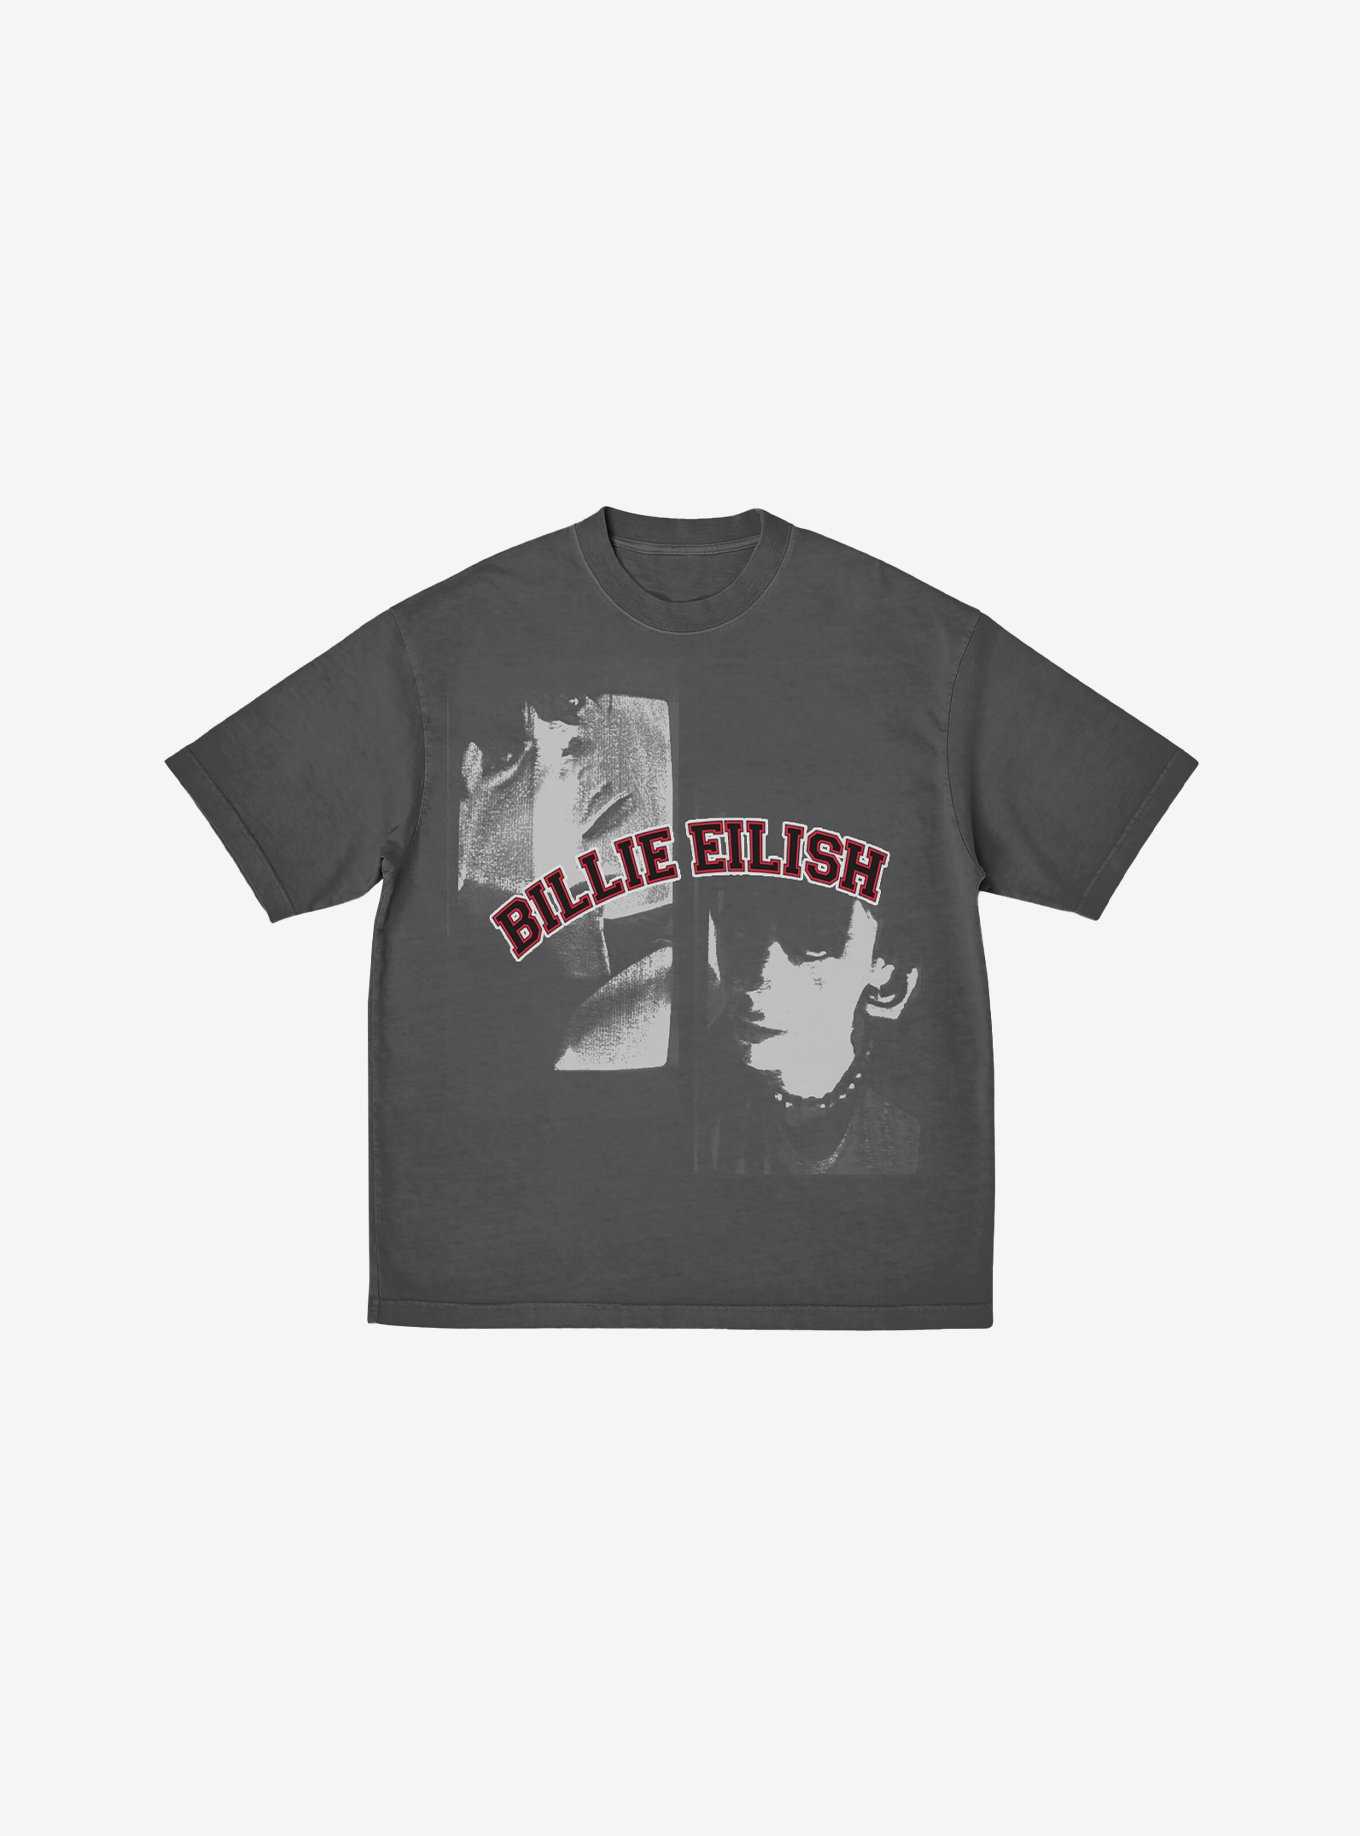 Billie Eilish Double Portrait Grey Boyfriend Fit Girls T-Shirt, , hi-res